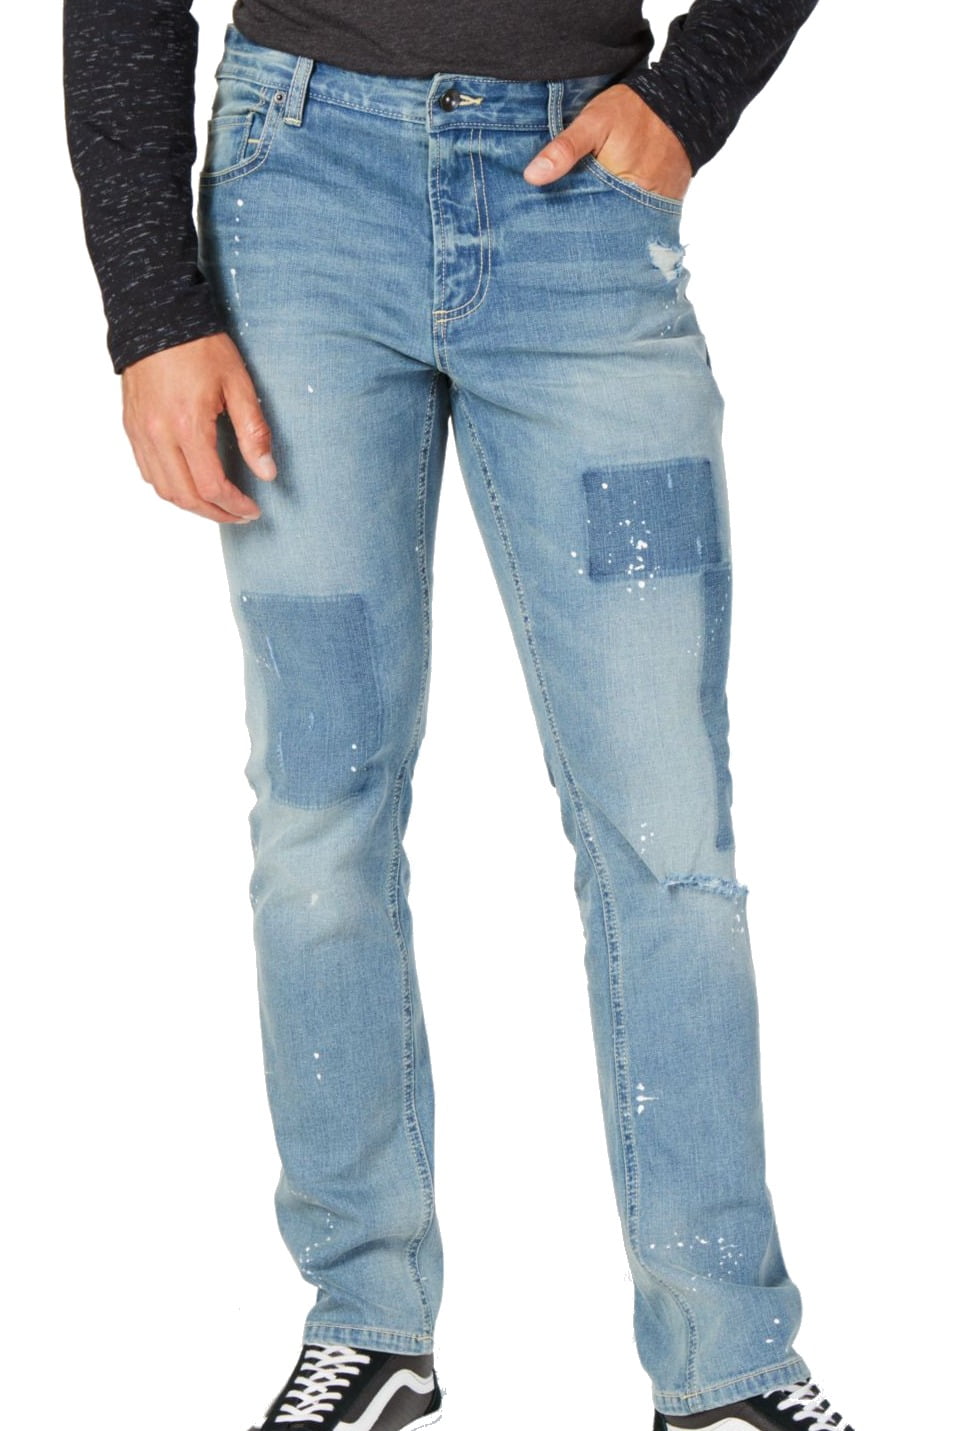 mens jeans paint splatter